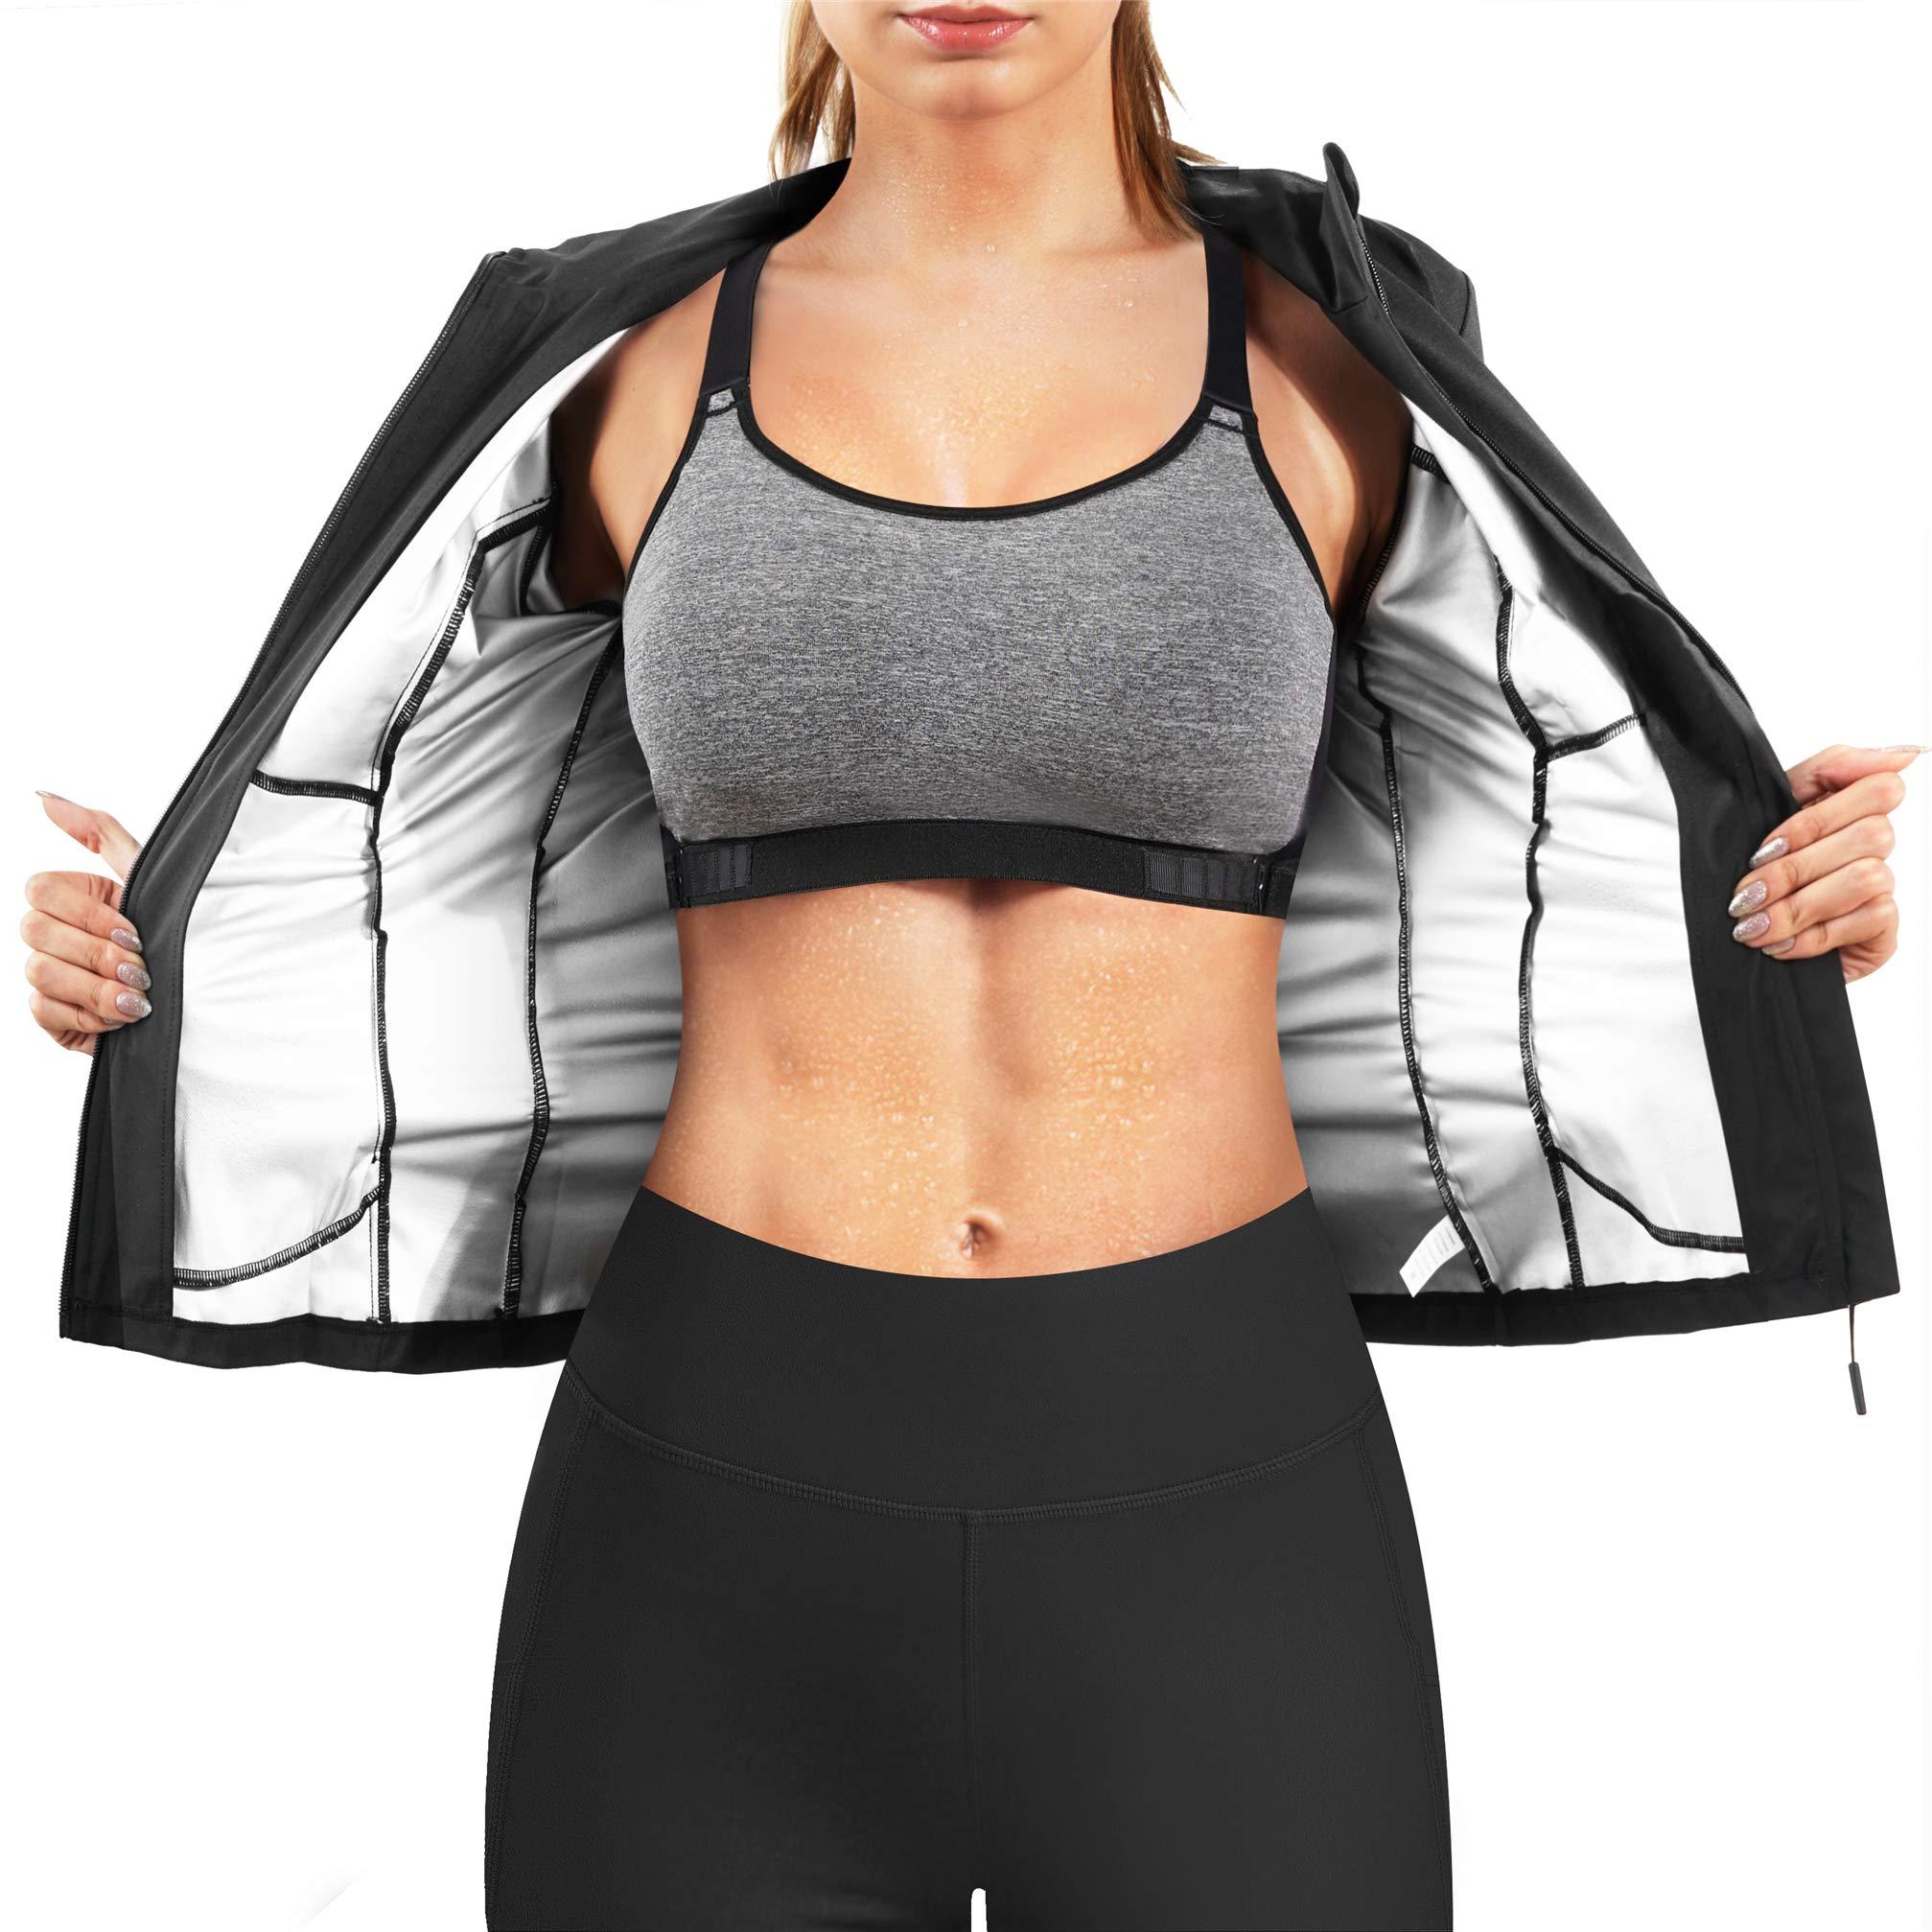 Chumian Women Hot Sweat Sauna Suit Track Jackets Workout Long Sleeve Tank Tops with Zipper Slimming Polymer Waist Trainer (Black, 3XL)